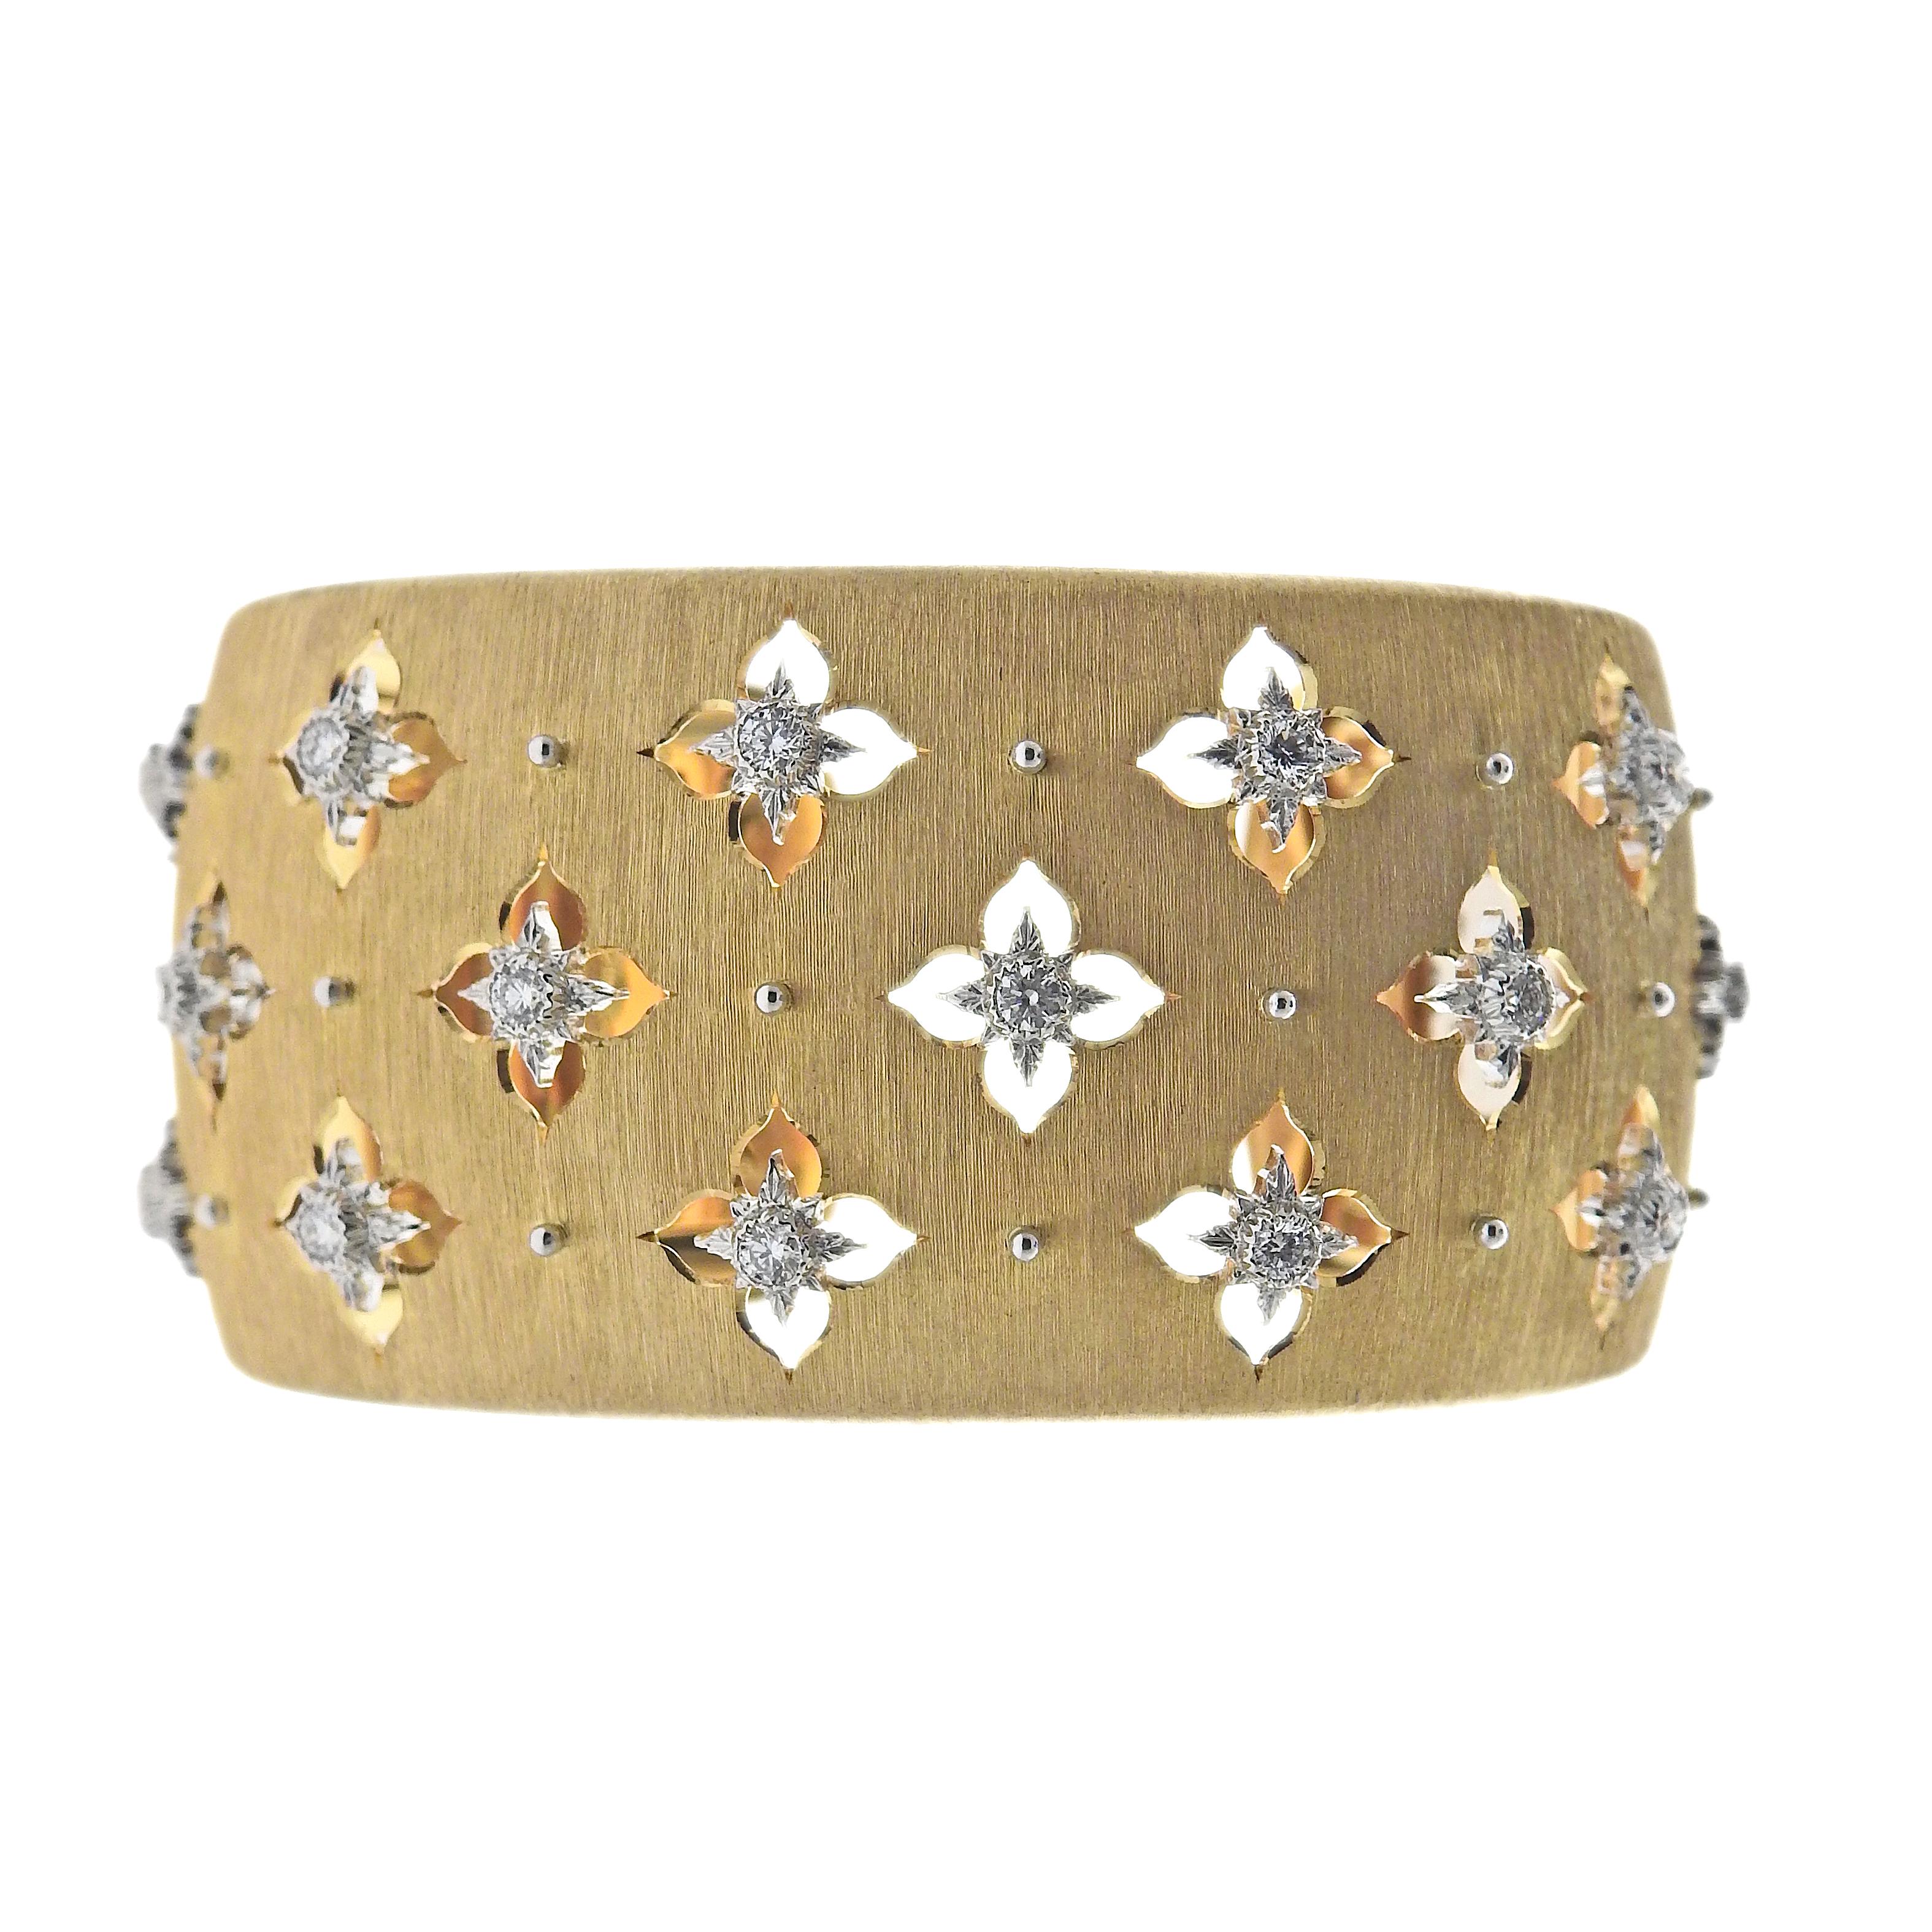 Buccellati 18K gold Macri Giglio cuff bracelet set with 0.75ctw in VS/FG diamonds. Bracelet measures 59mm circumference (15cm), width is 3cm. Marked: Buccellati italian marks, Au750, W18M1U. Weight is 63.3 grams.